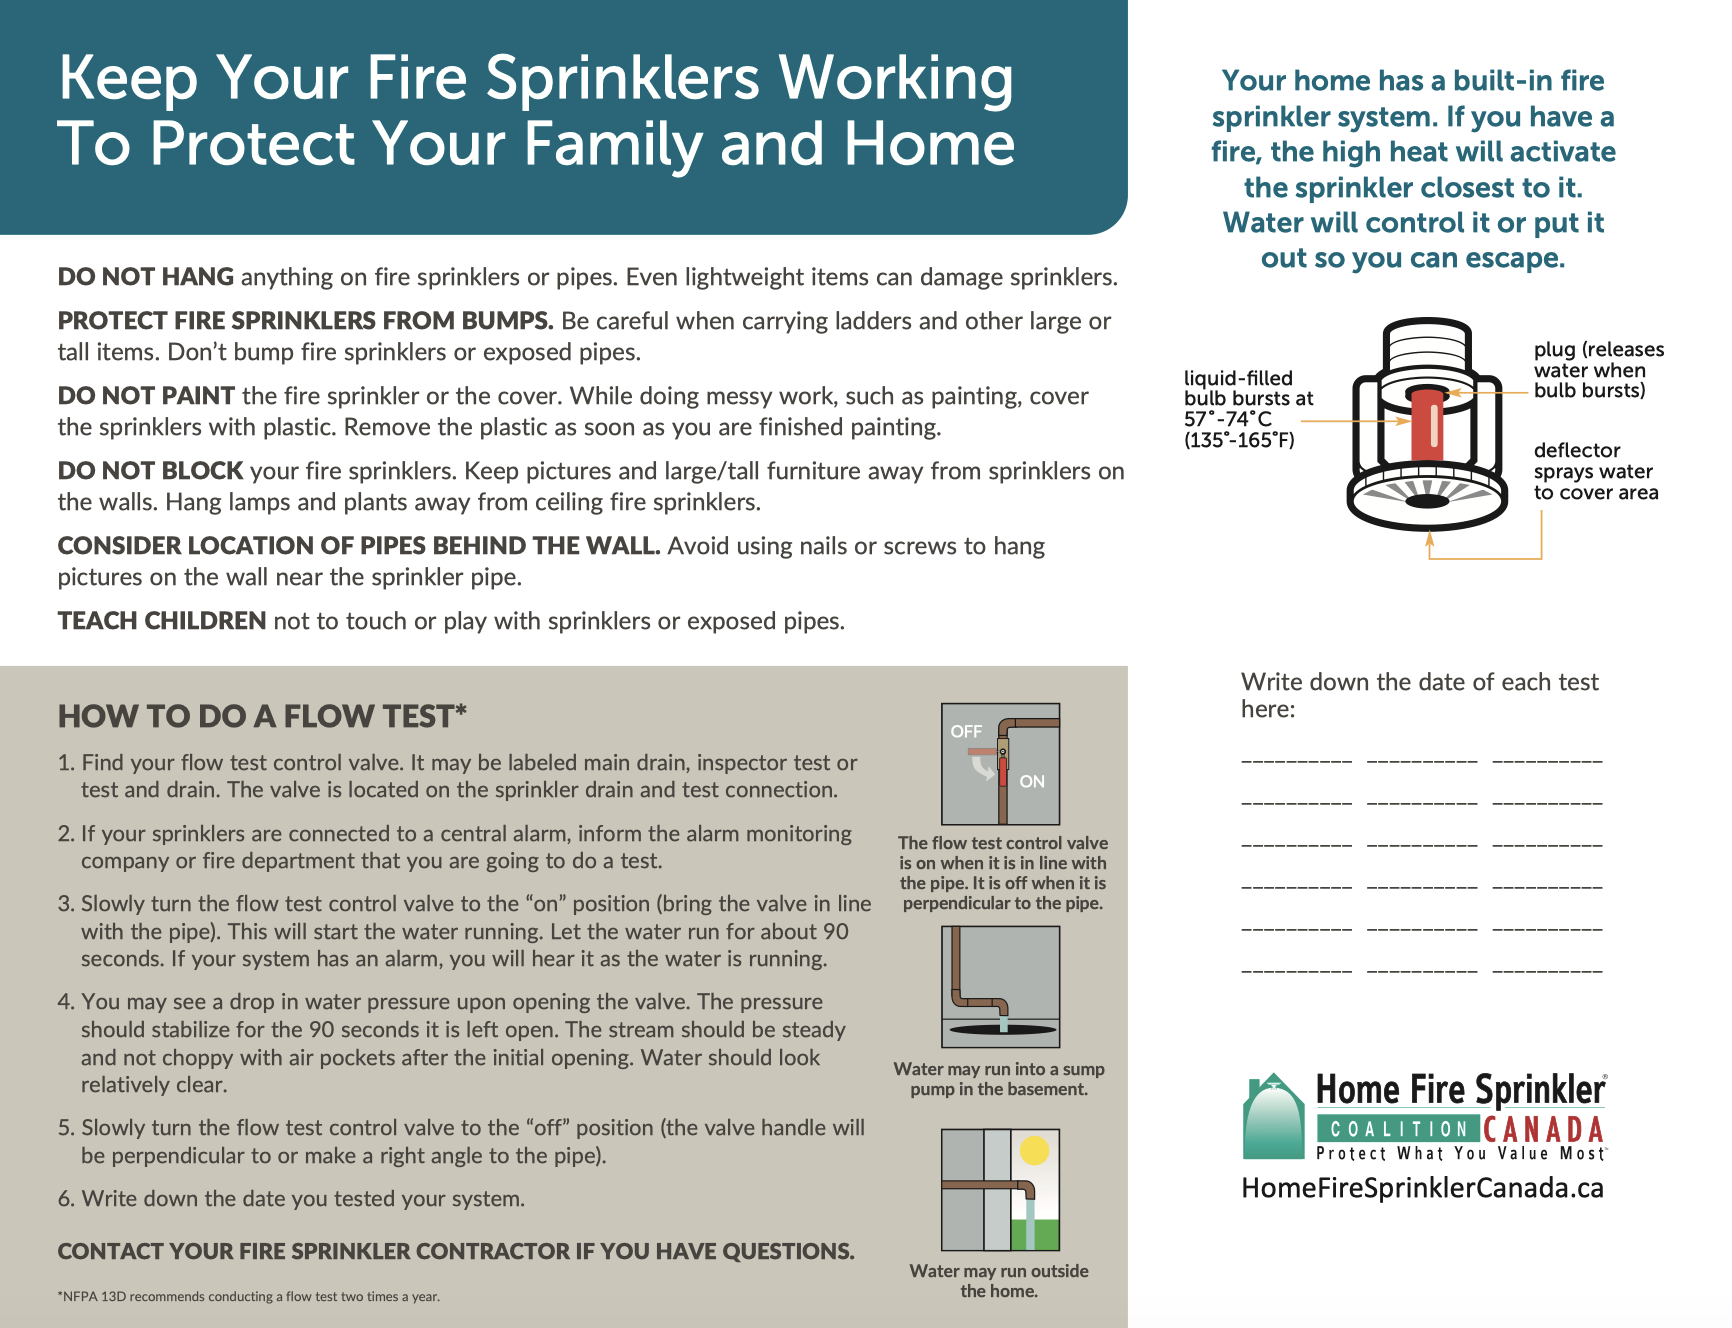 Top 5 Reasons for Fire Sprinkler System Deficiencies - Frontier